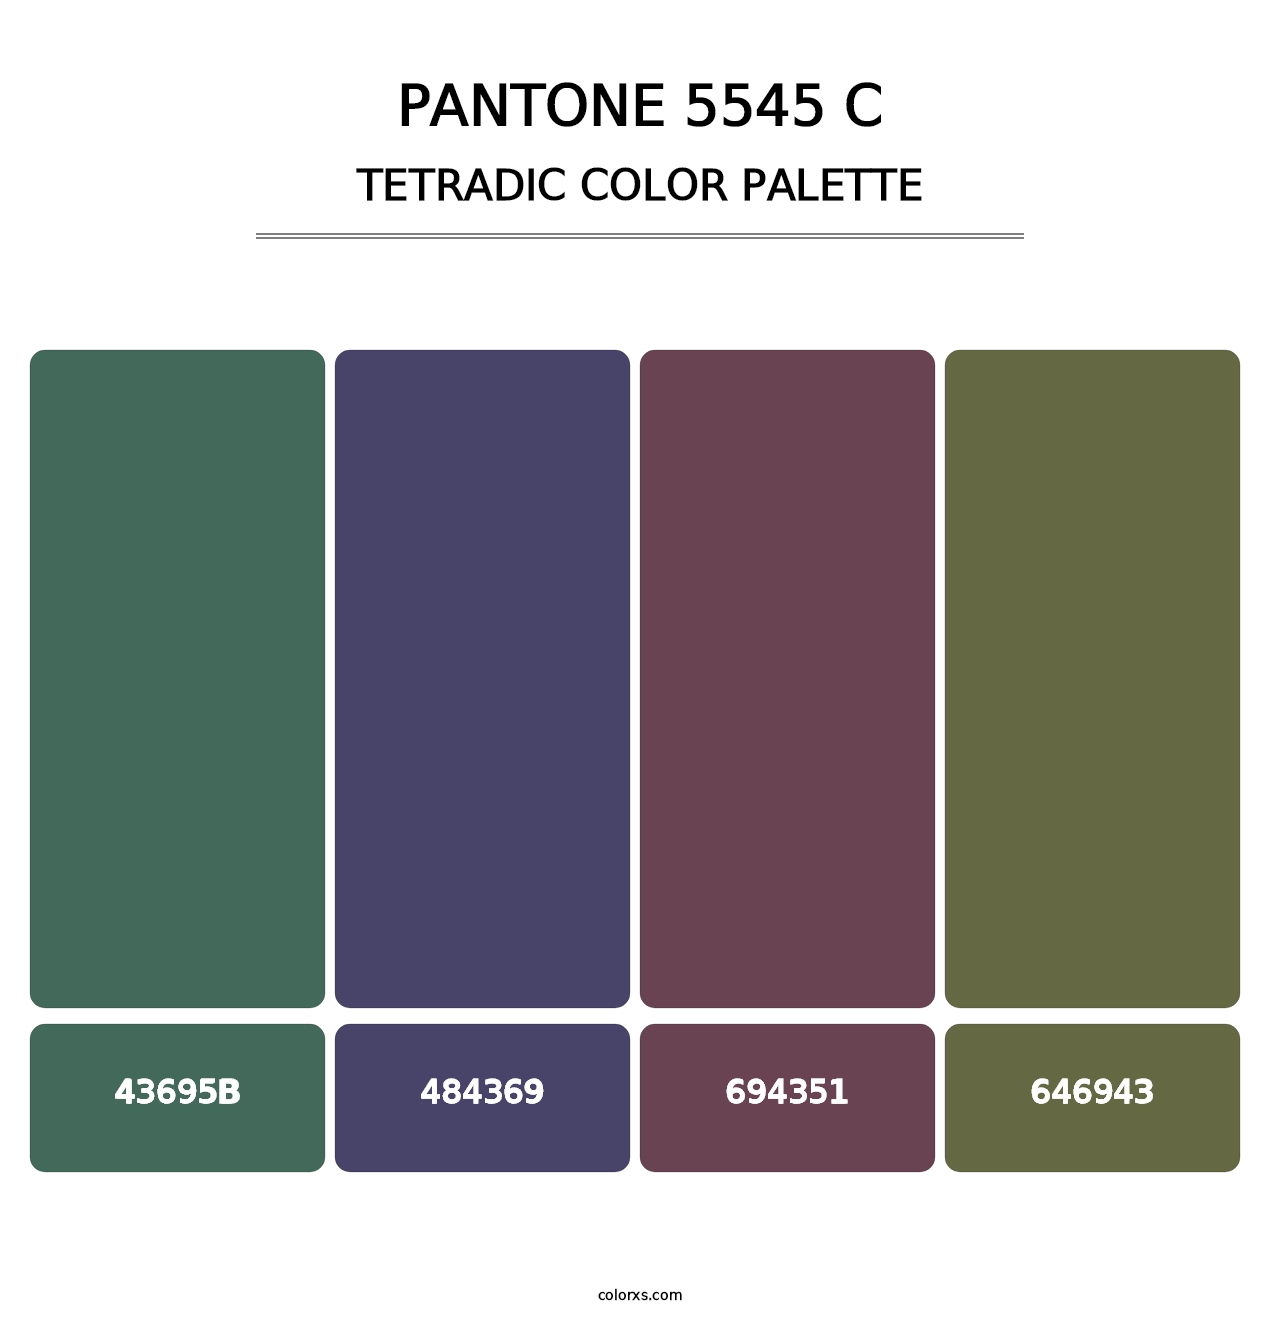 PANTONE 5545 C - Tetradic Color Palette